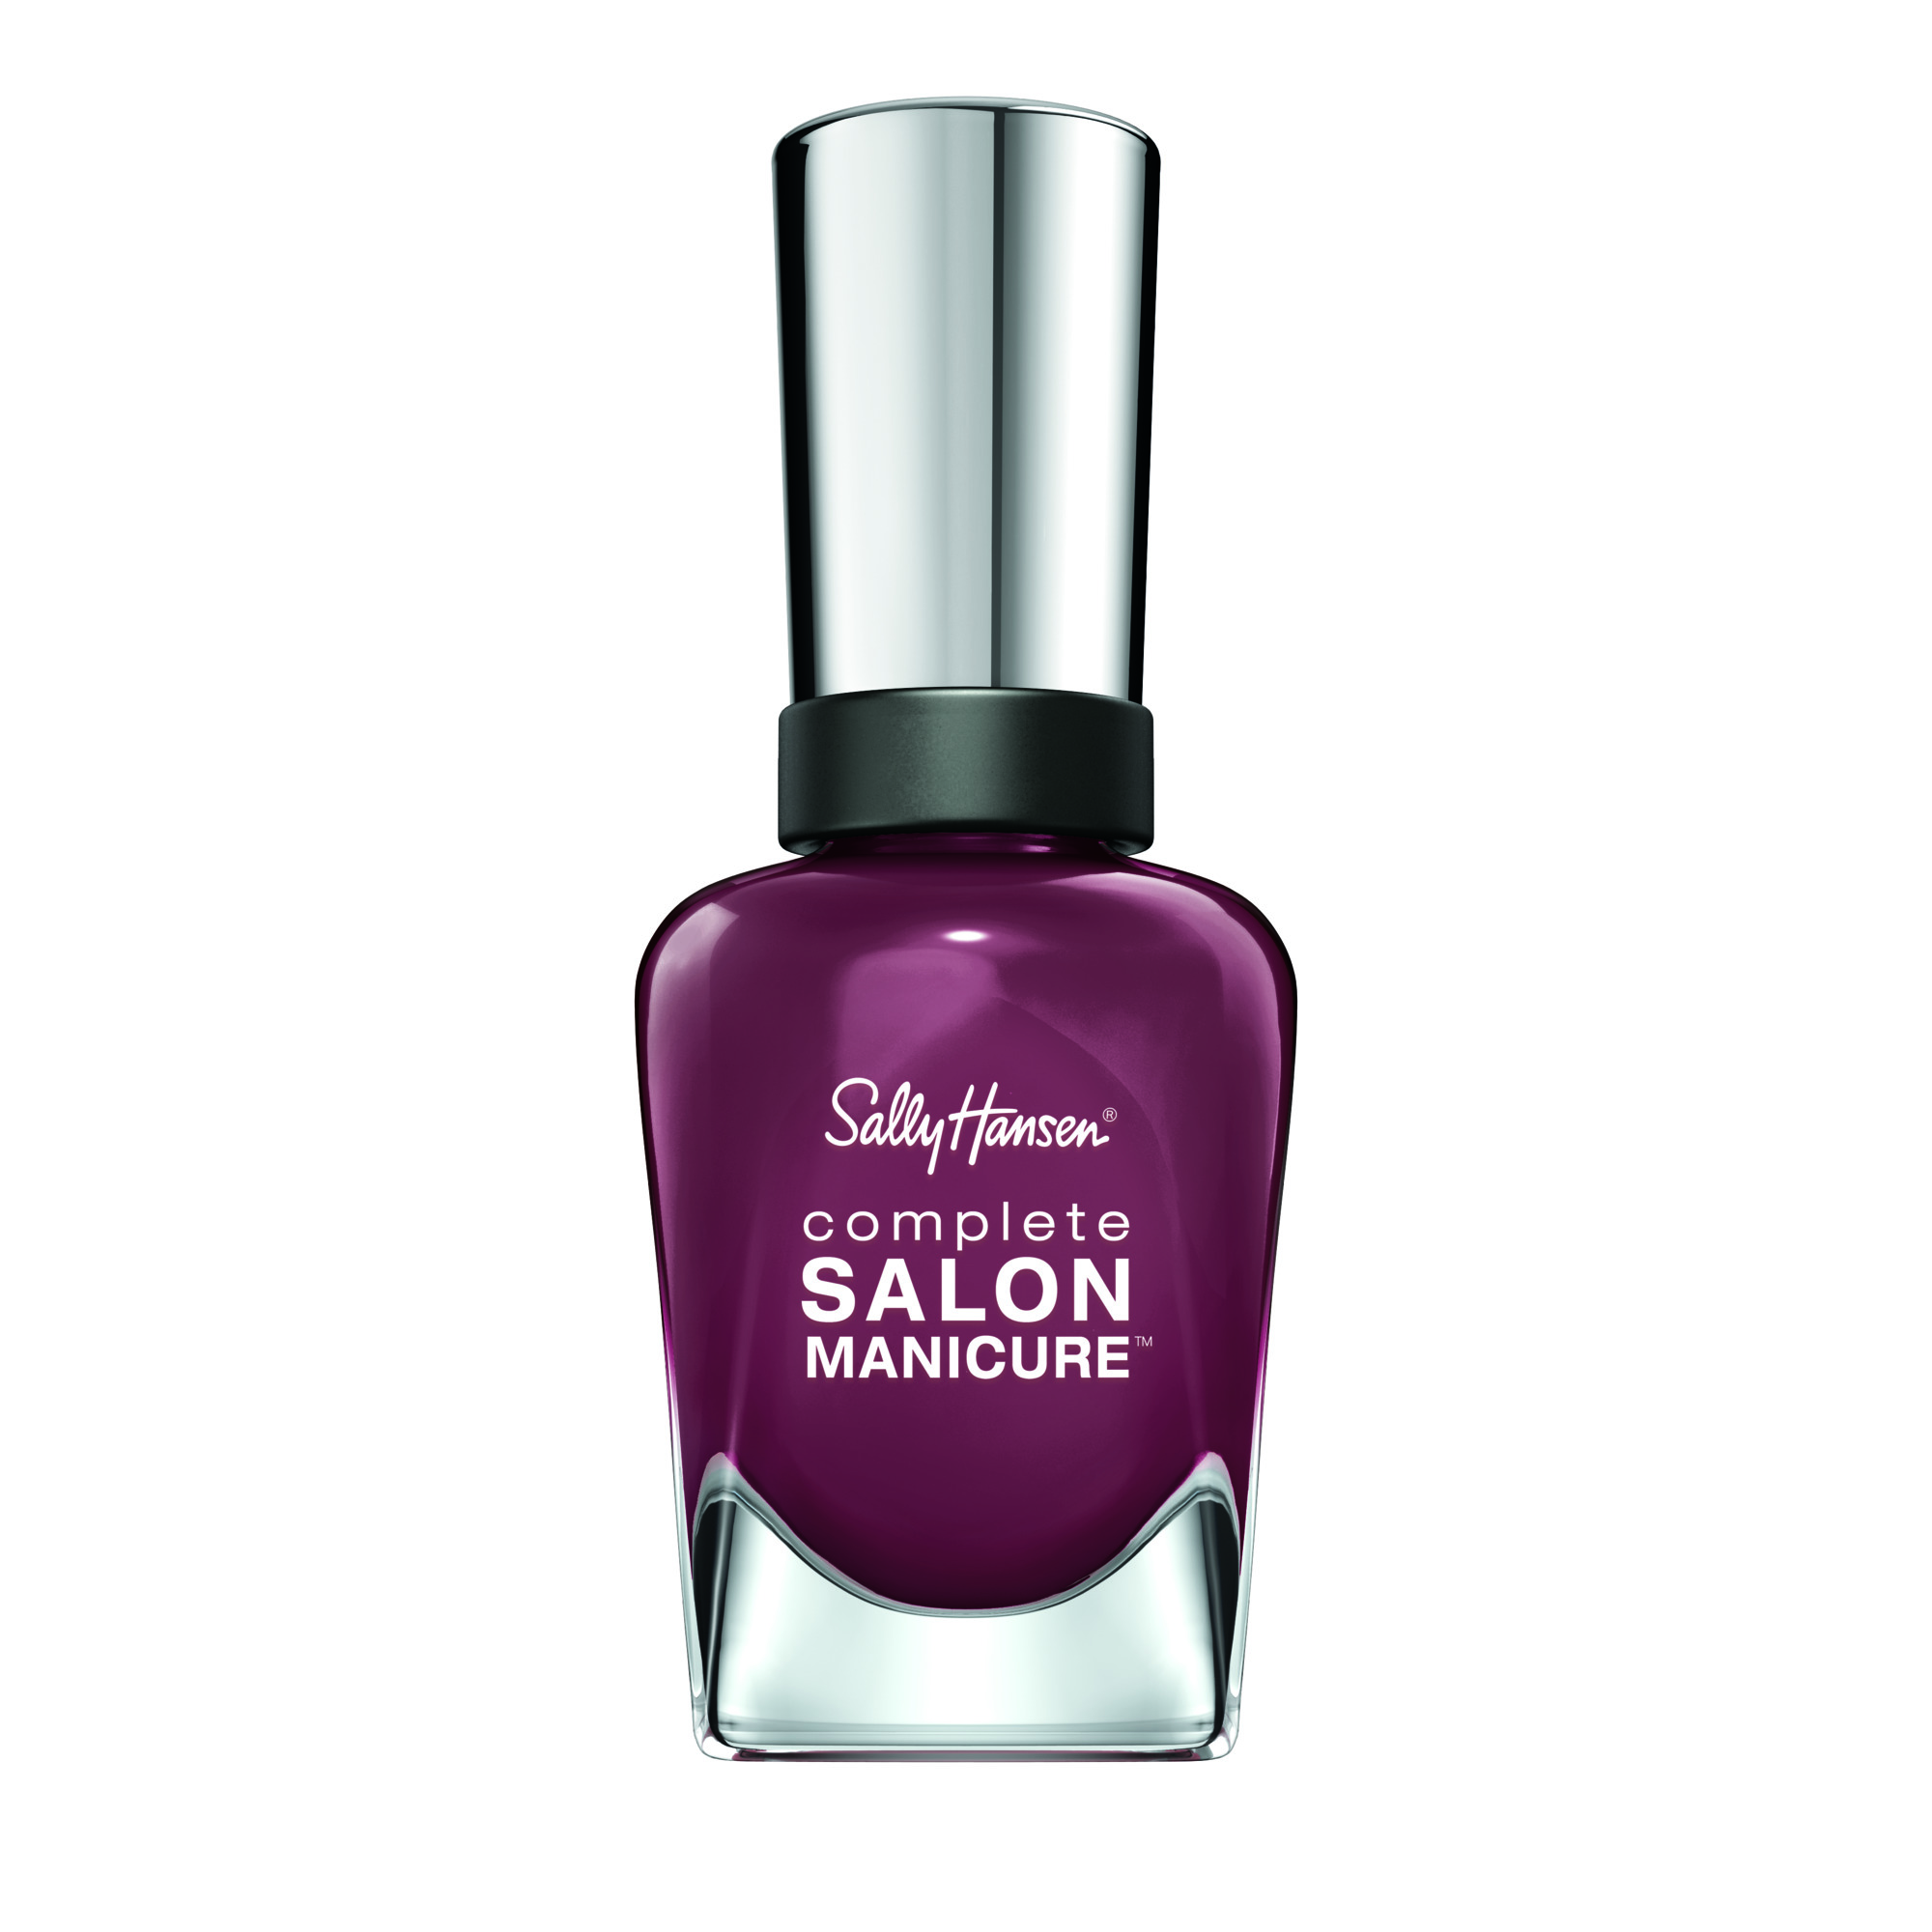 Sally Hansen Complete Salon Manicure Nail Polish, Berry Fancy - image 1 of 1